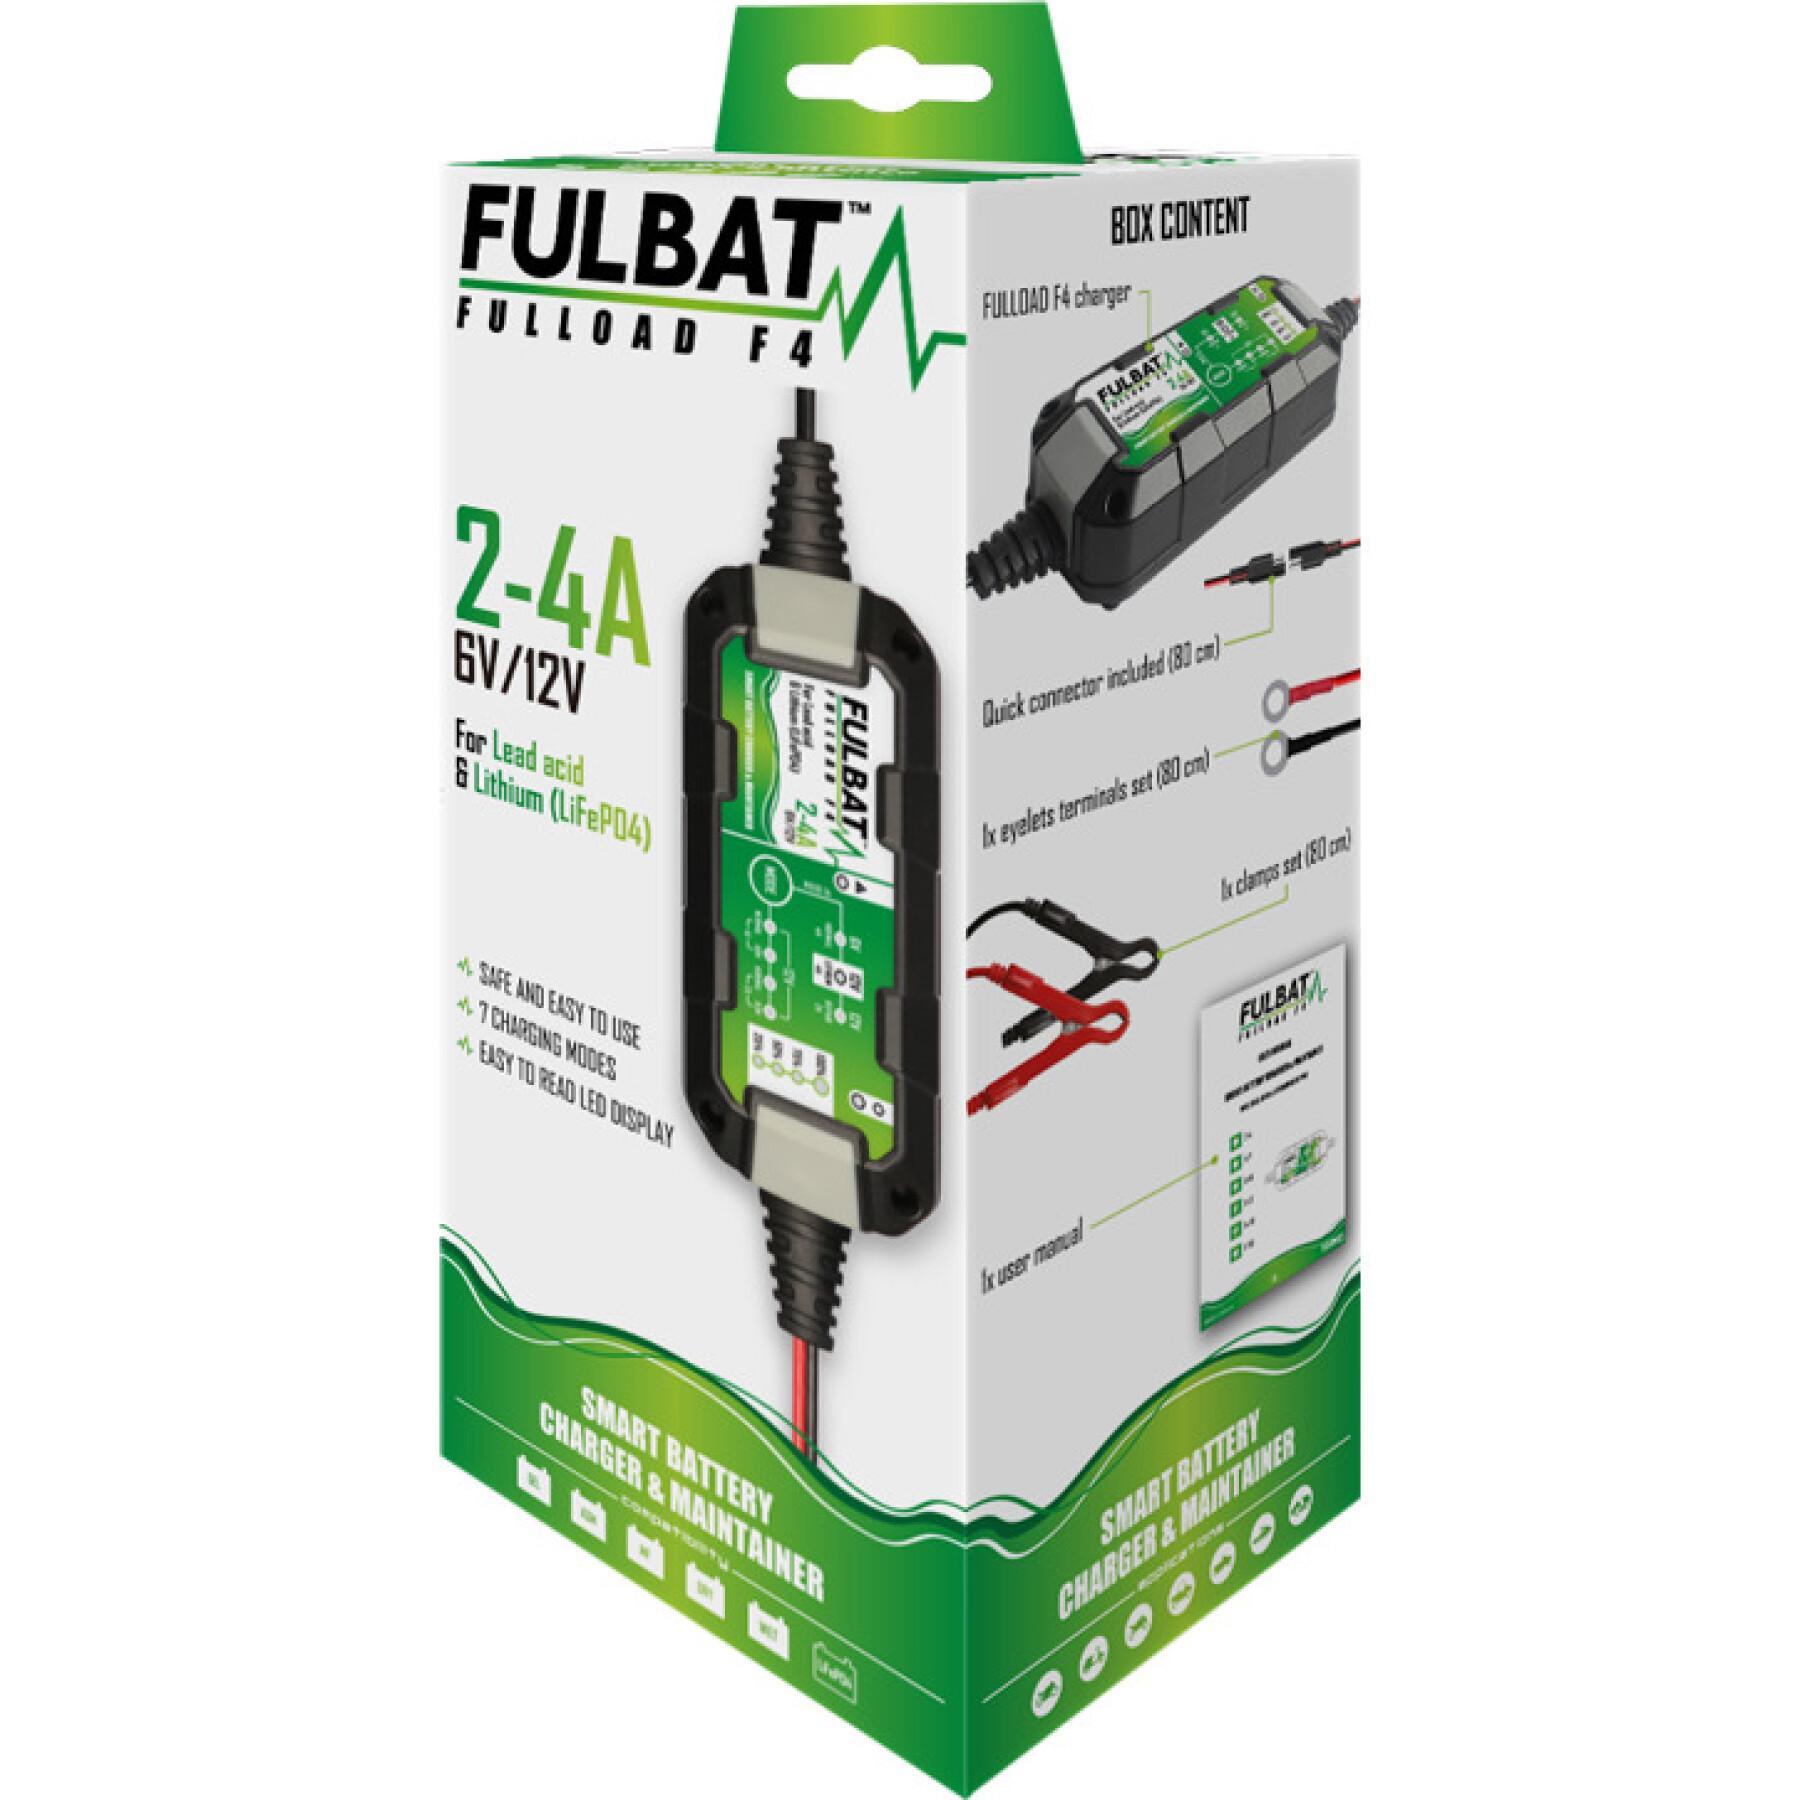 Battery charger Fulbat Fulload F4